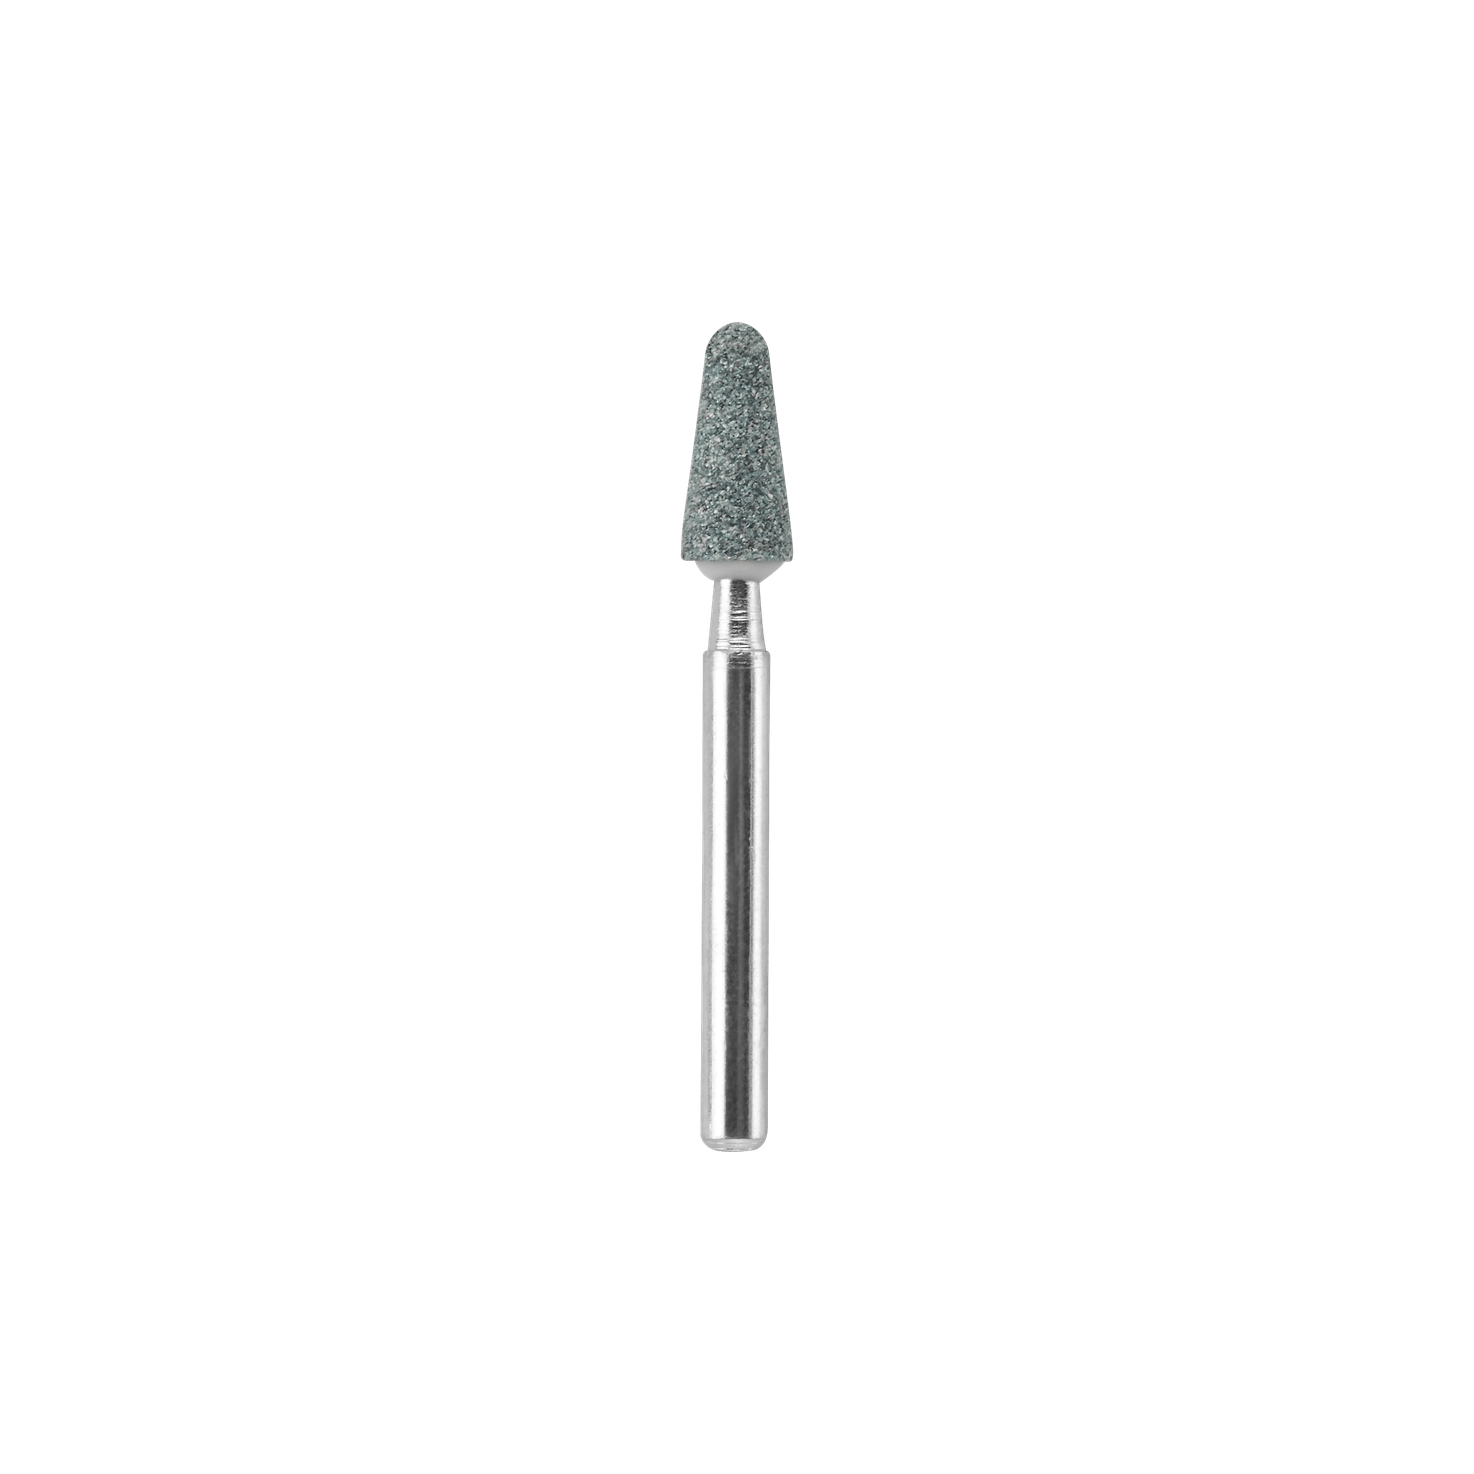 Dremel 4300 Variable Speed Corded 1.8-Amp Multipurpose Rotary Tool